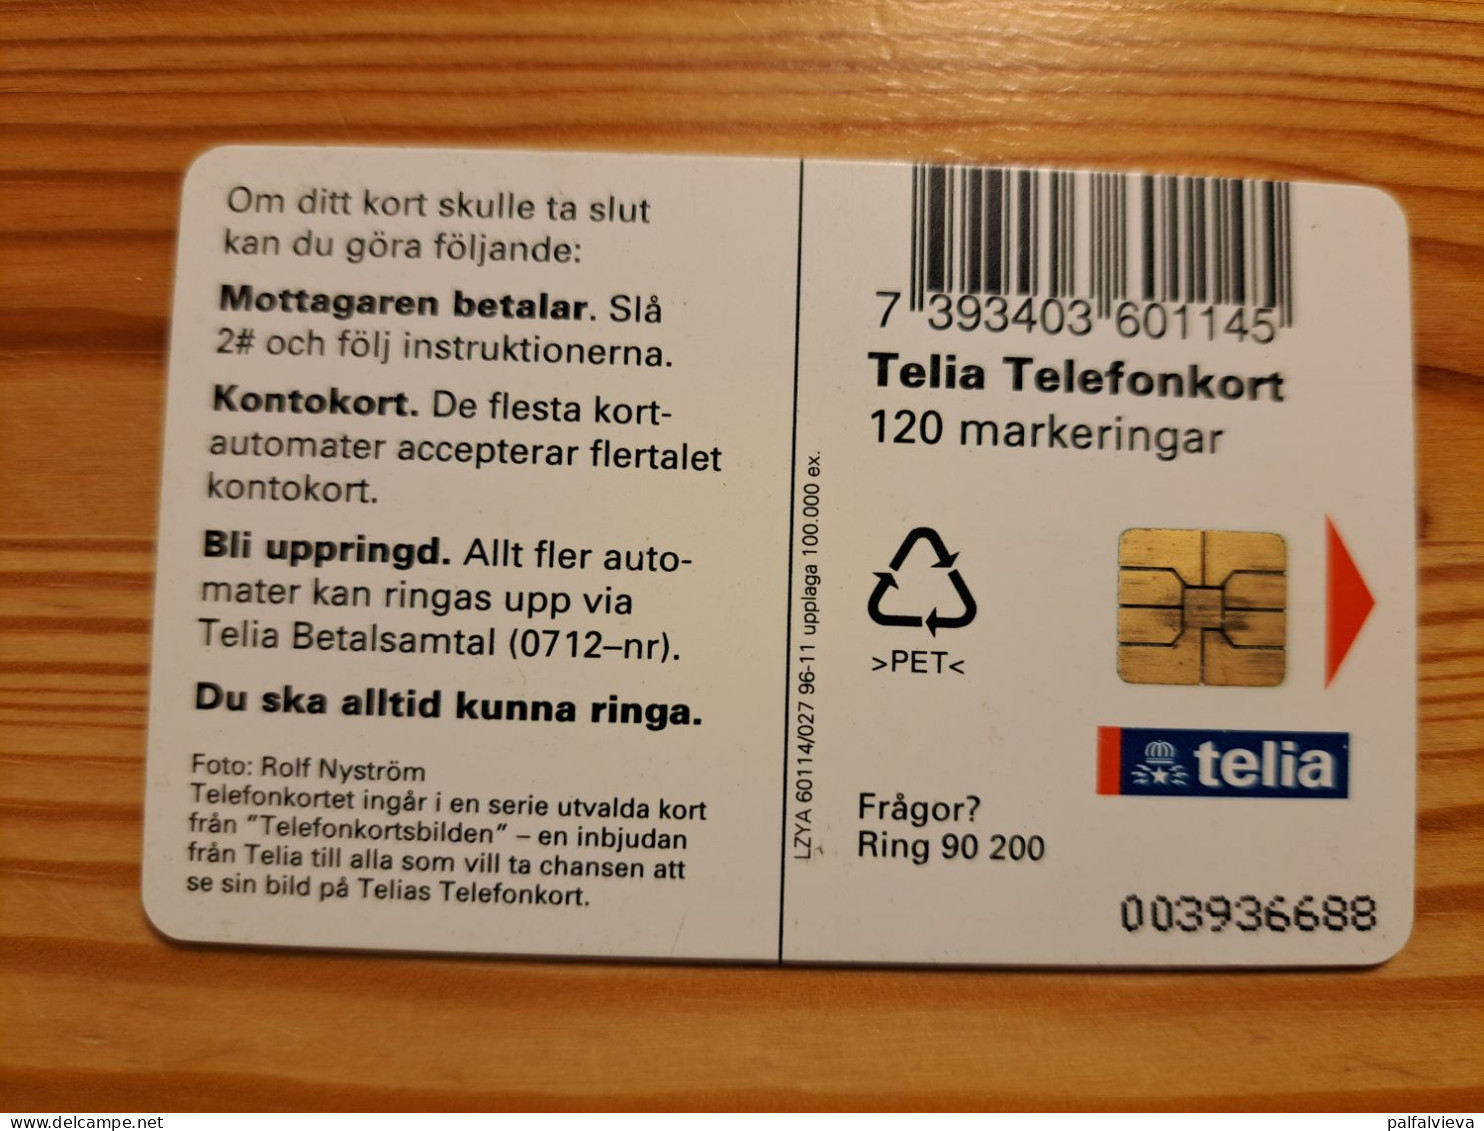 Phonecard Sweden - Horse - Sweden